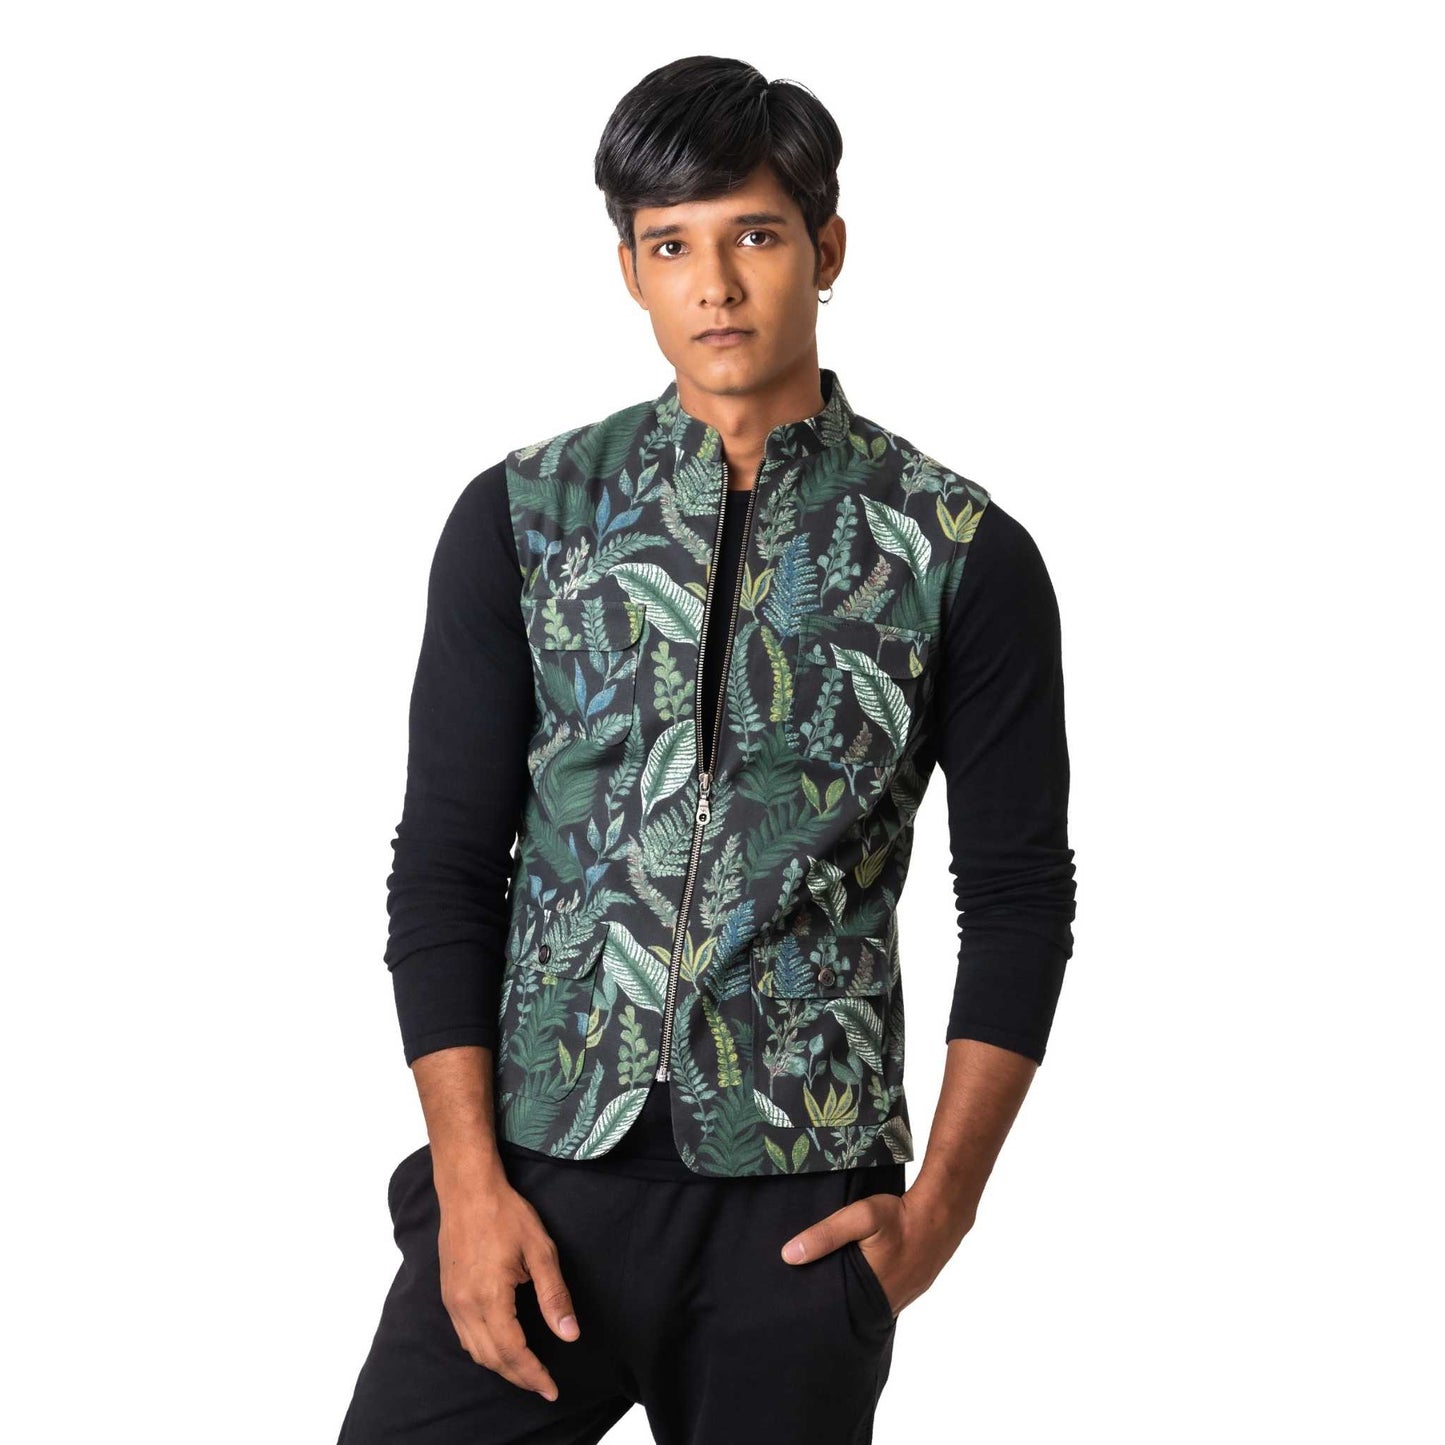 Sleeveless bandi in jungle printed cotton with metallic zipper